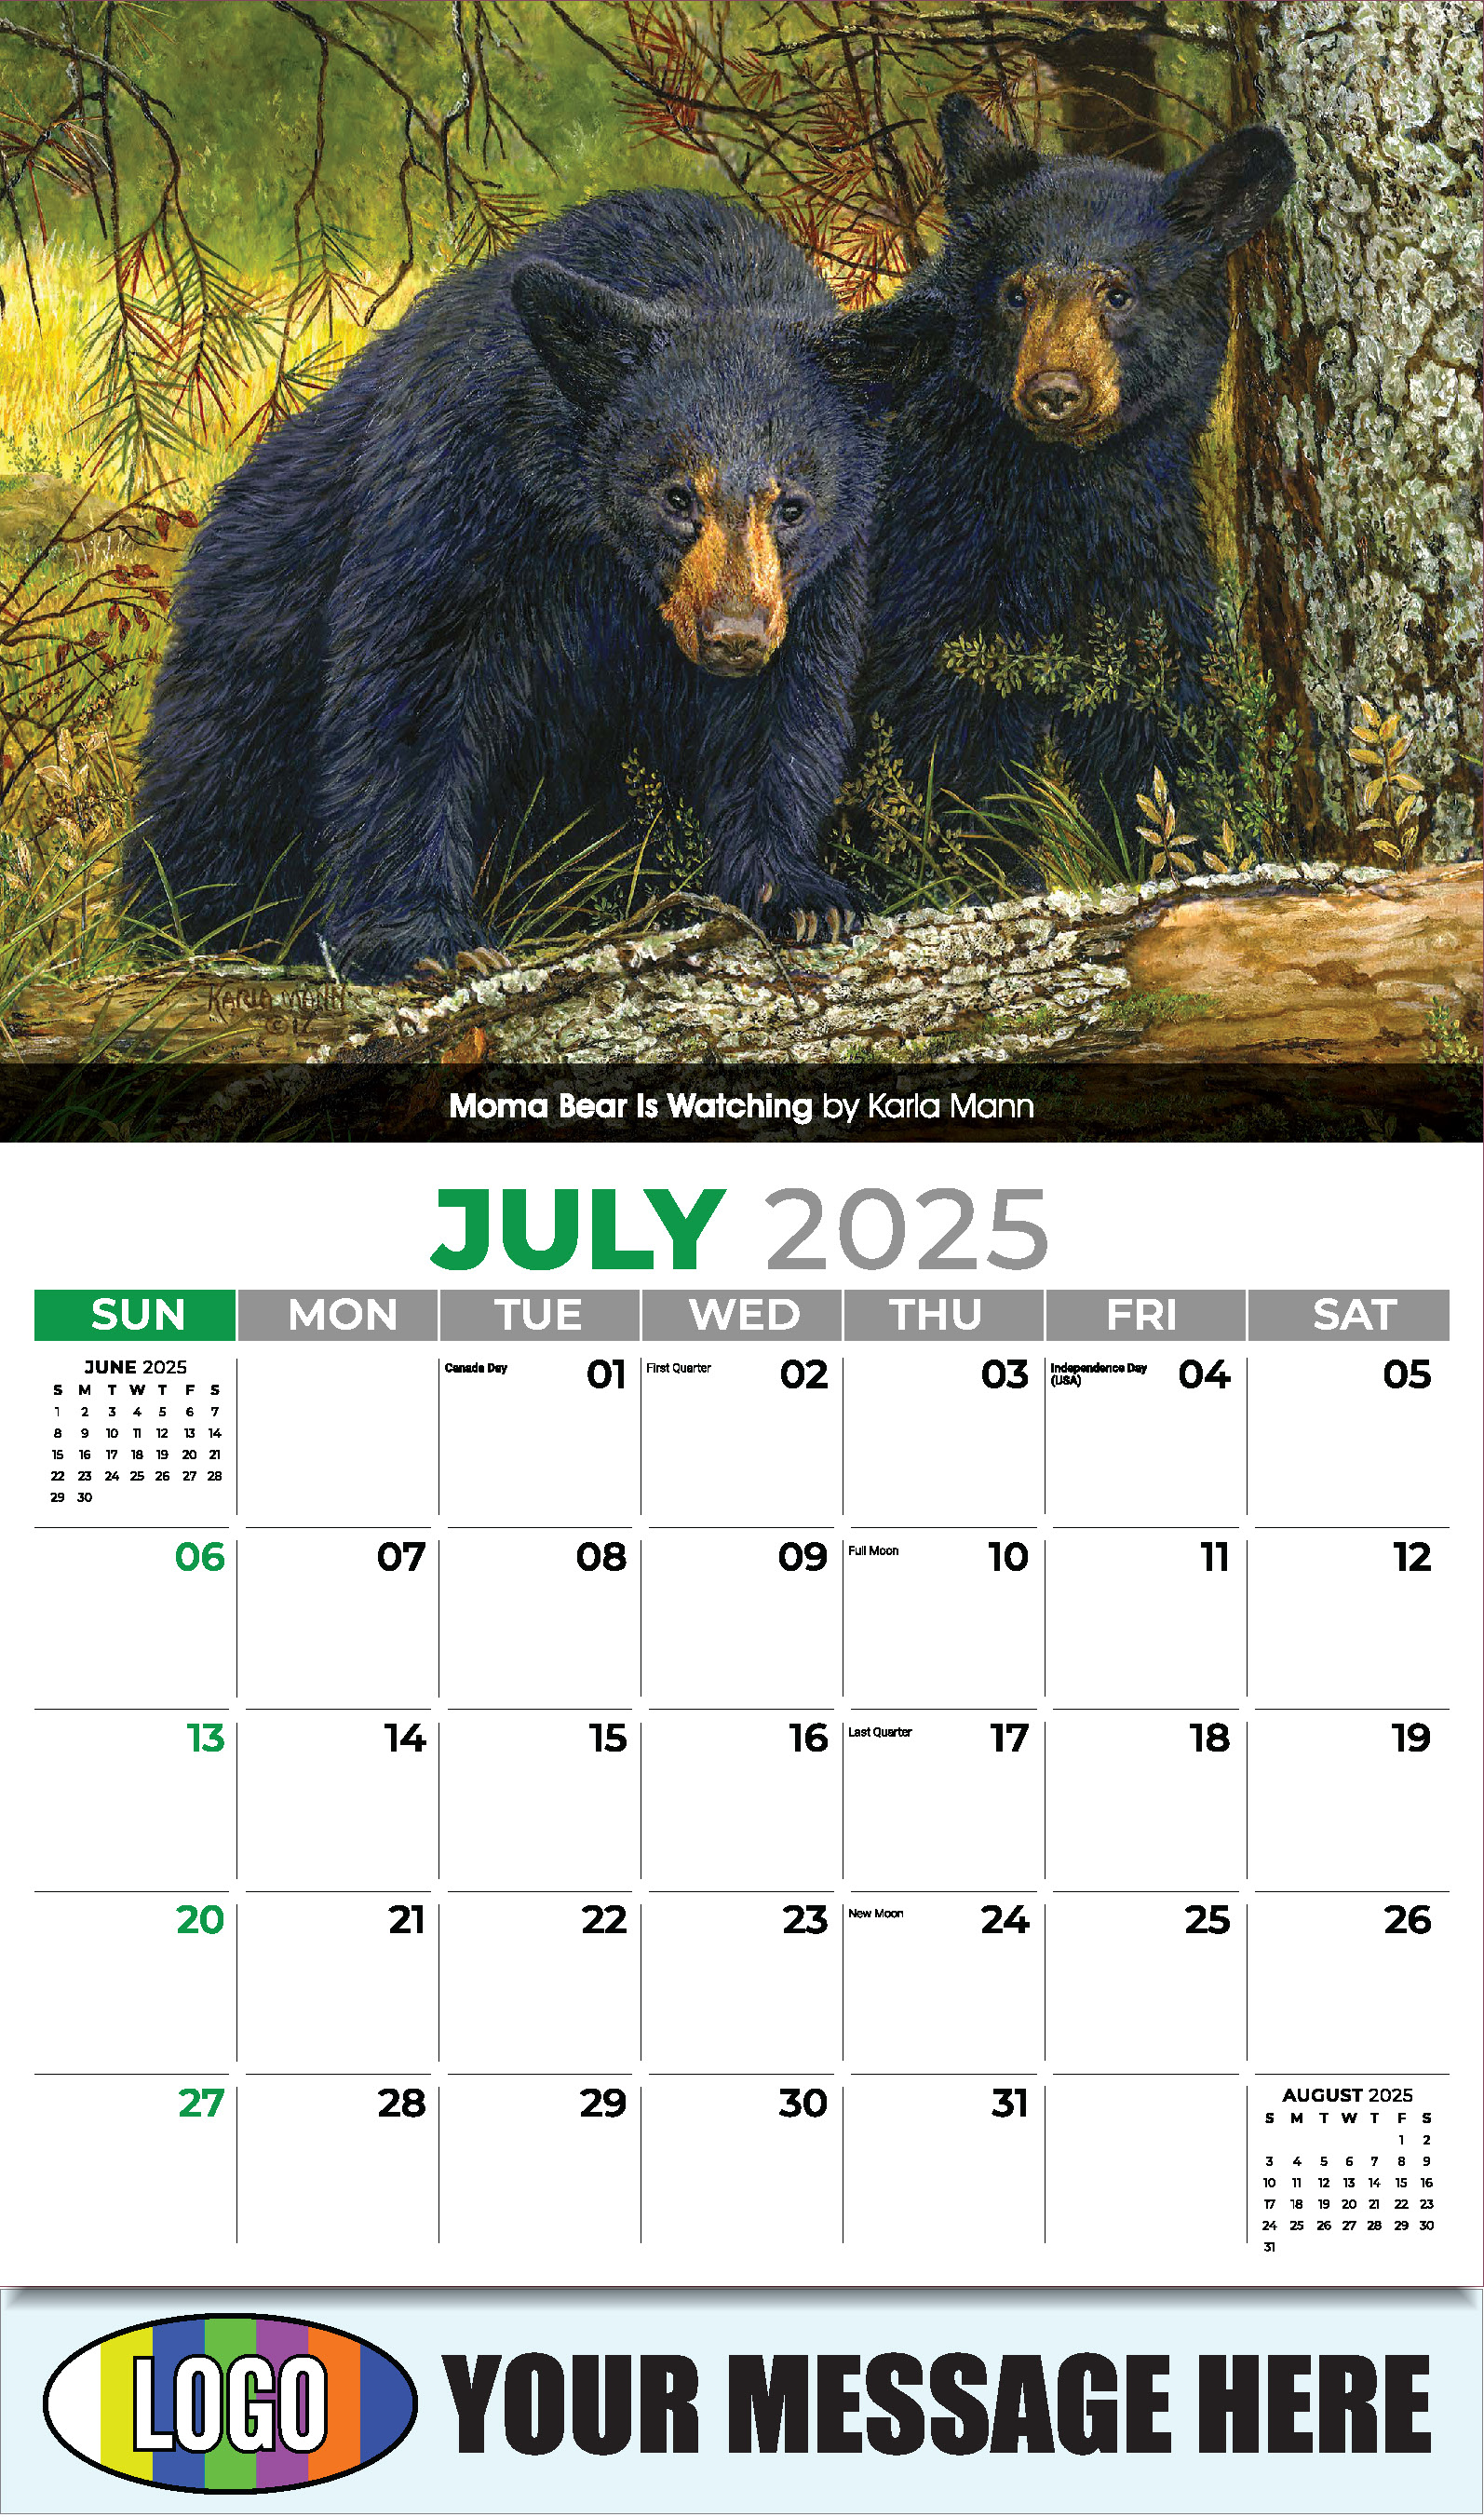 Wildlife Art Portraits 2025 Business Promotion Wall Calendar - July